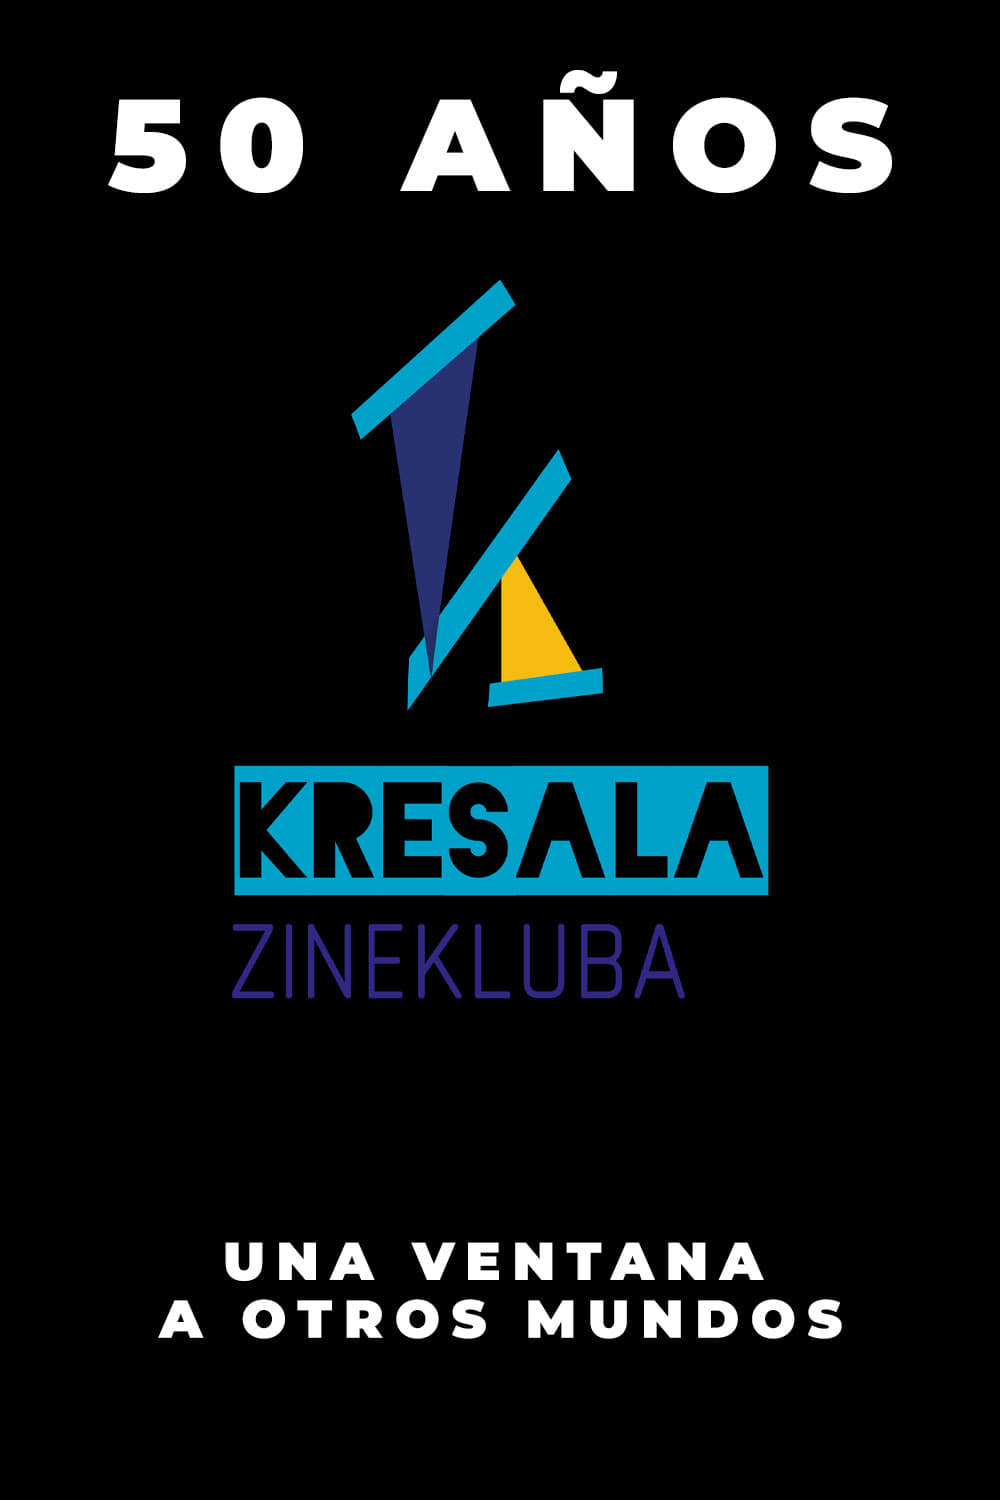 Kresala Zinekluba, una ventana a otros mundos